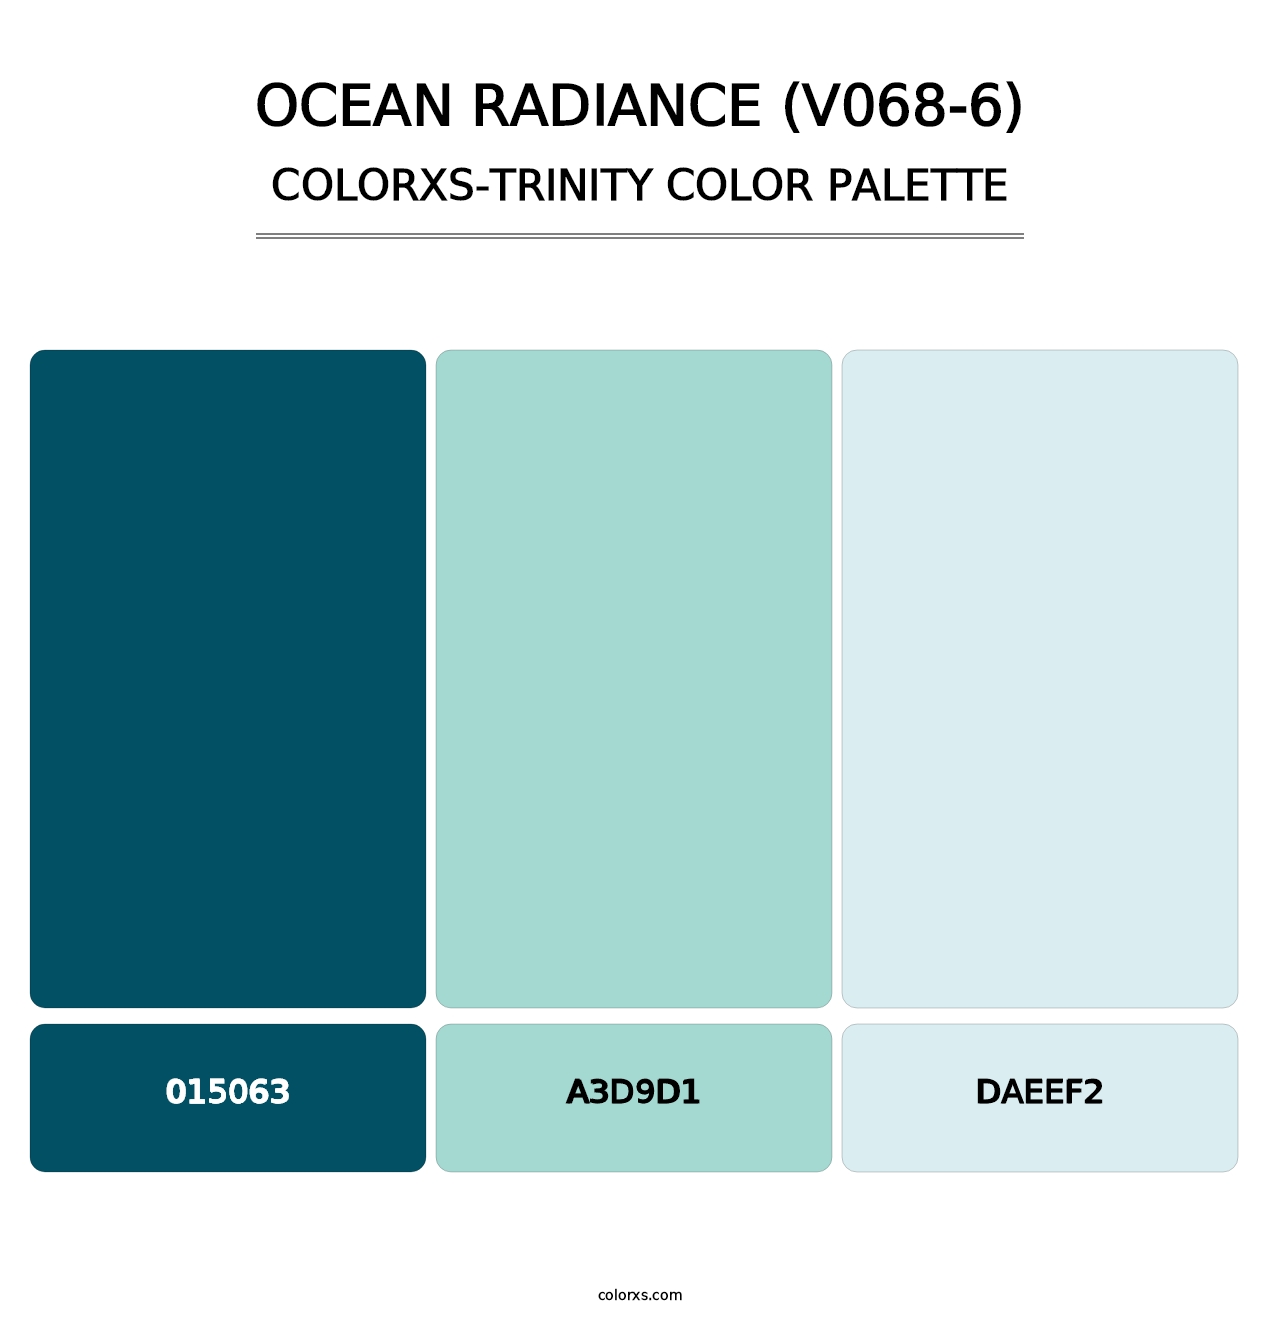 Ocean Radiance (V068-6) - Colorxs Trinity Palette